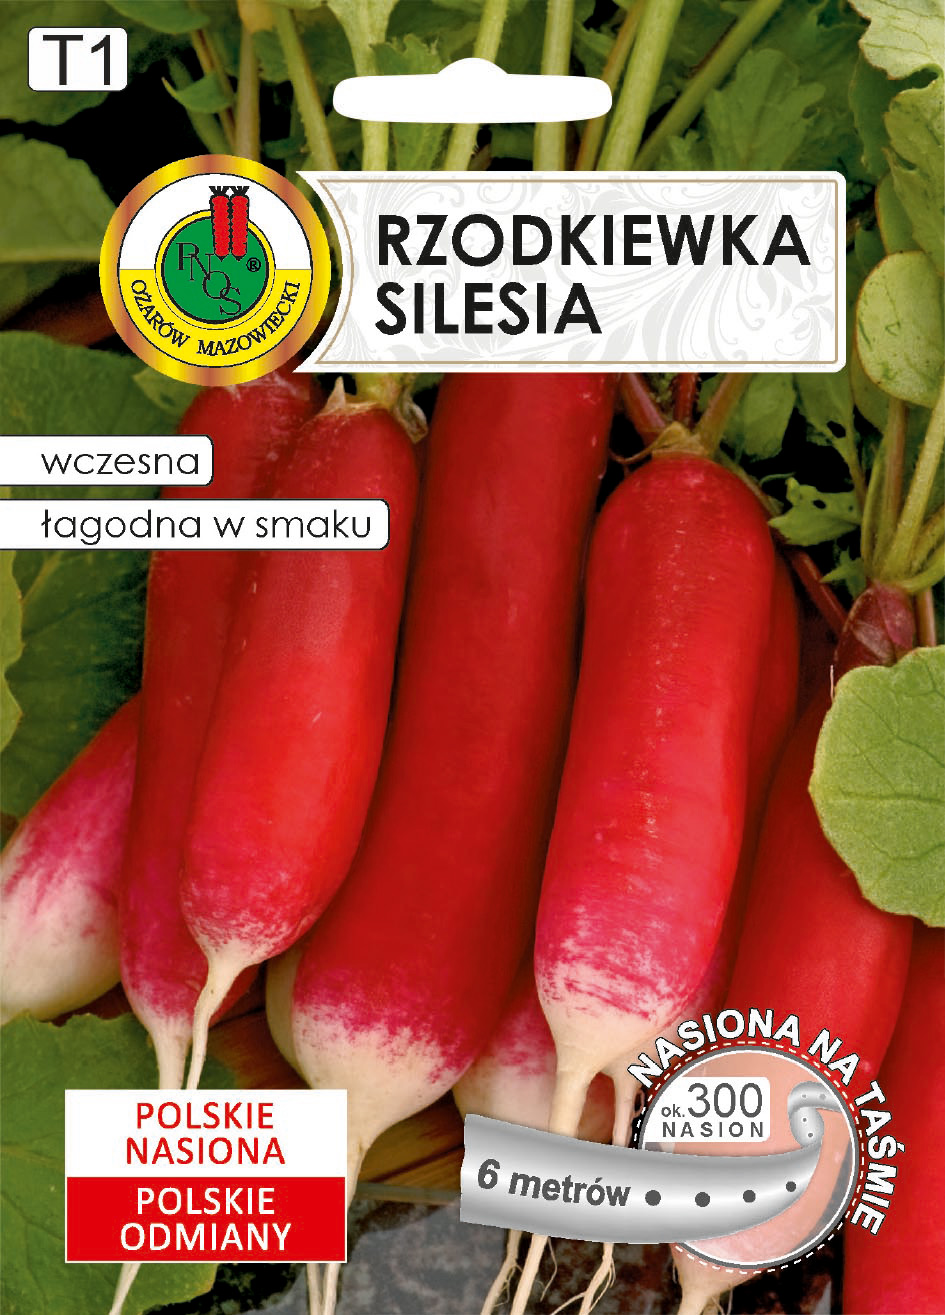 Rzodkiewka Silesia nasiona na taśmie PNOS